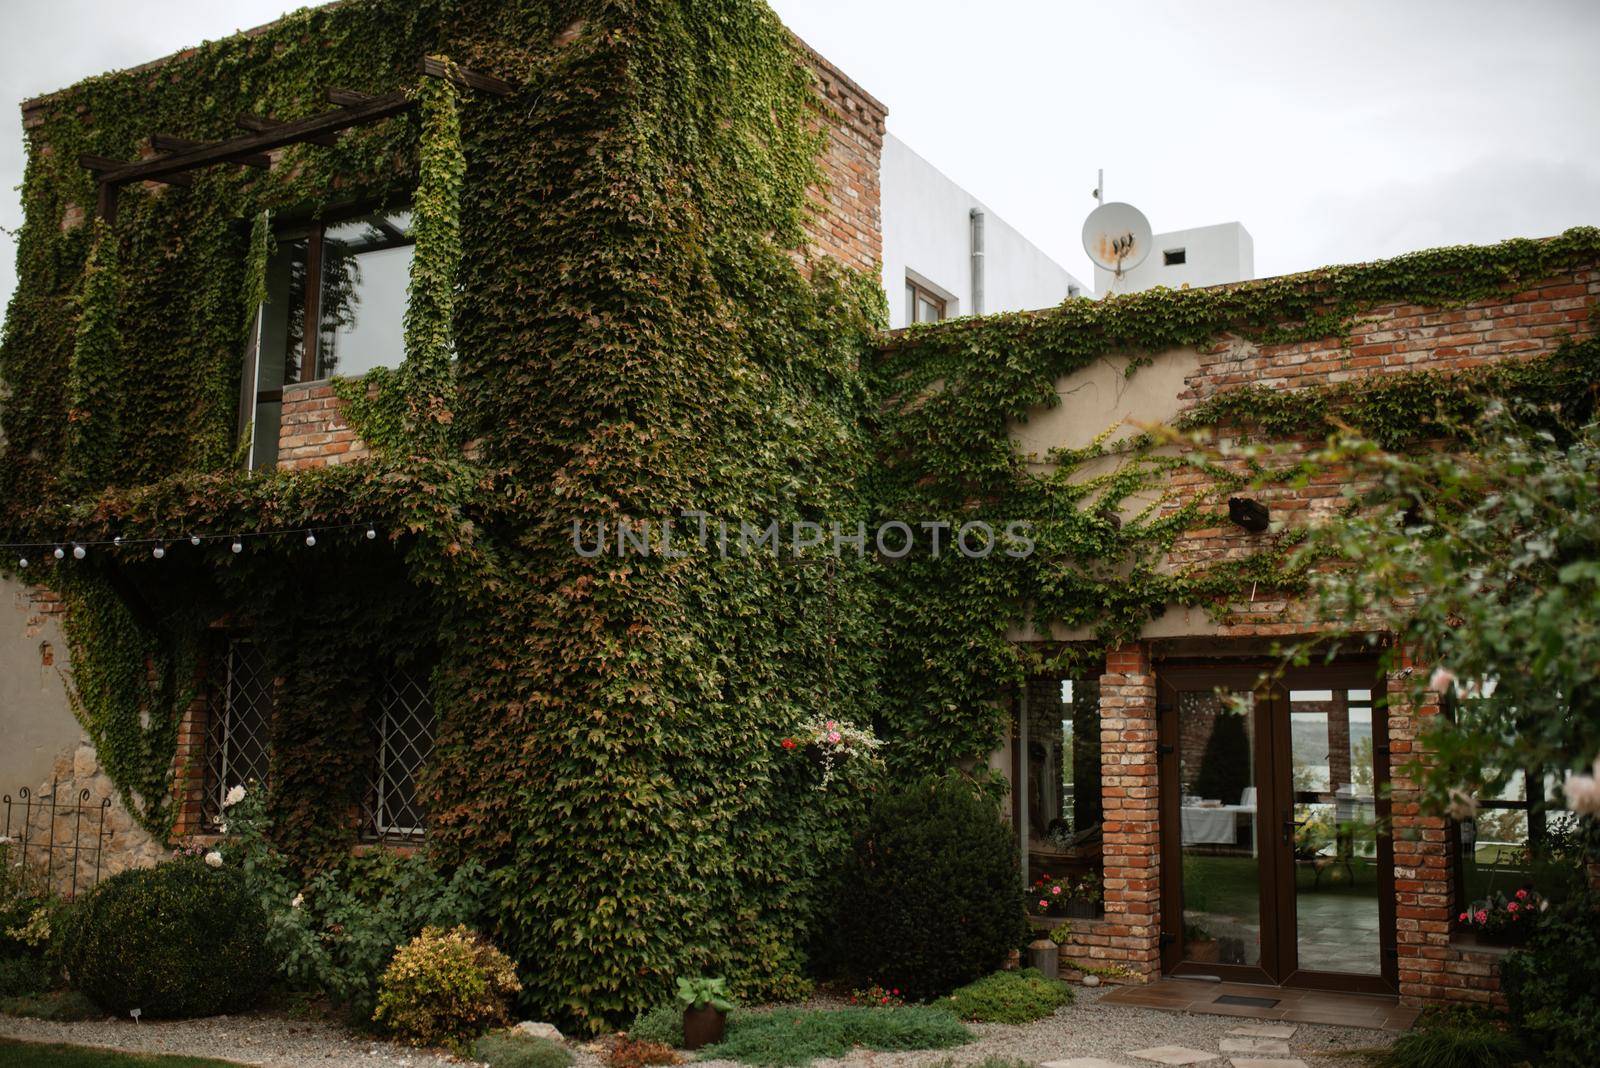 villa red brick restaurant overgrown with green wild grapes